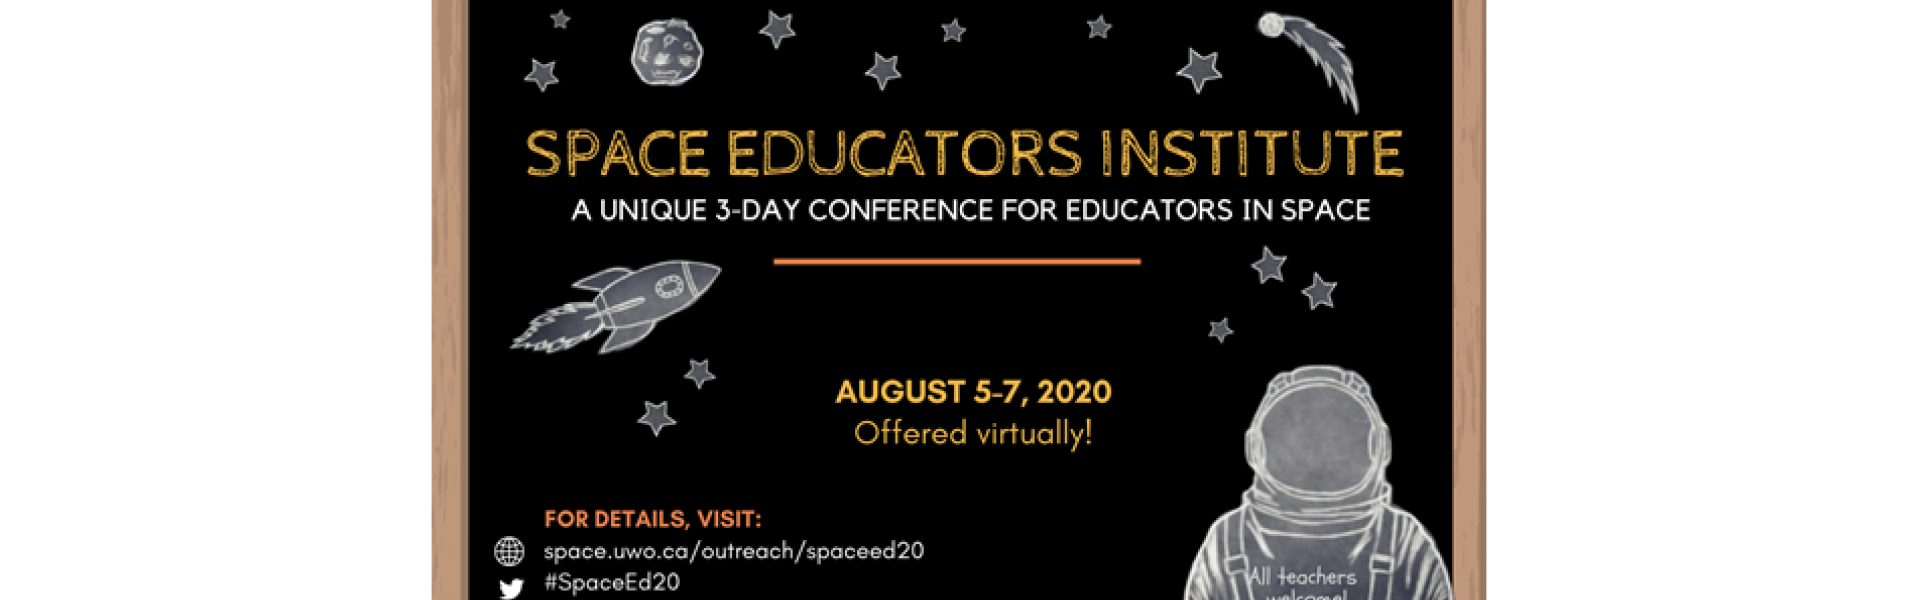 Space Educators Institute Conference 2020